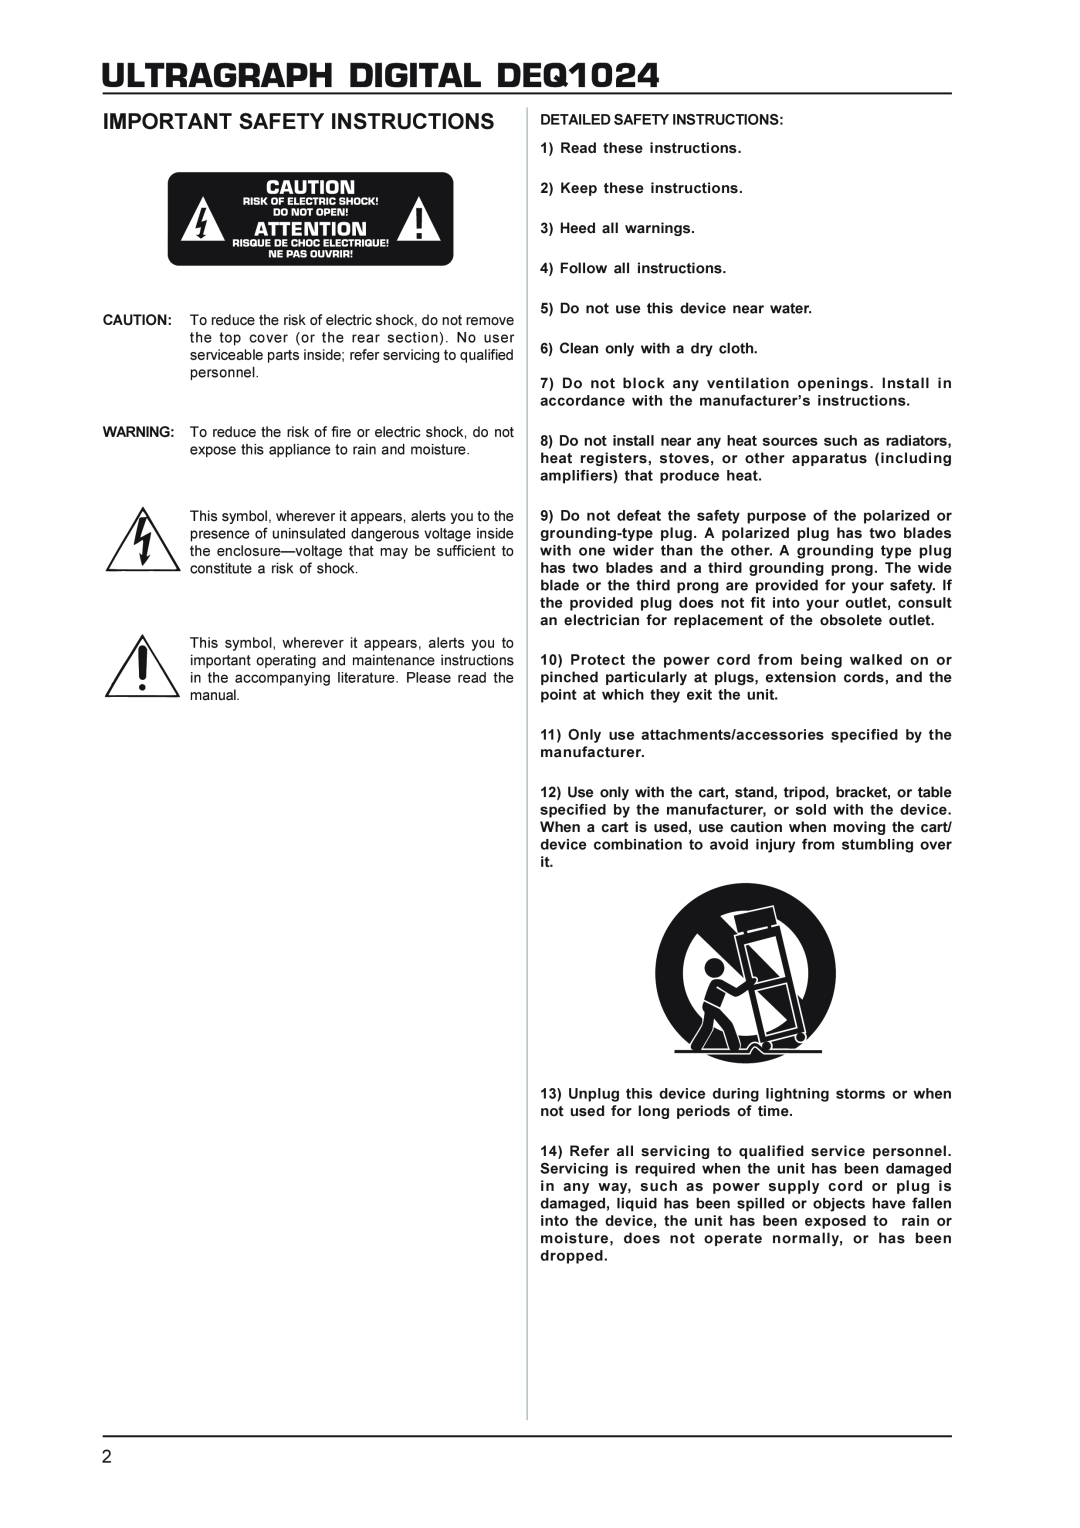 Behringer manual ULTRAGRAPH DIGITAL DEQ1024, Important Safety Instructions 